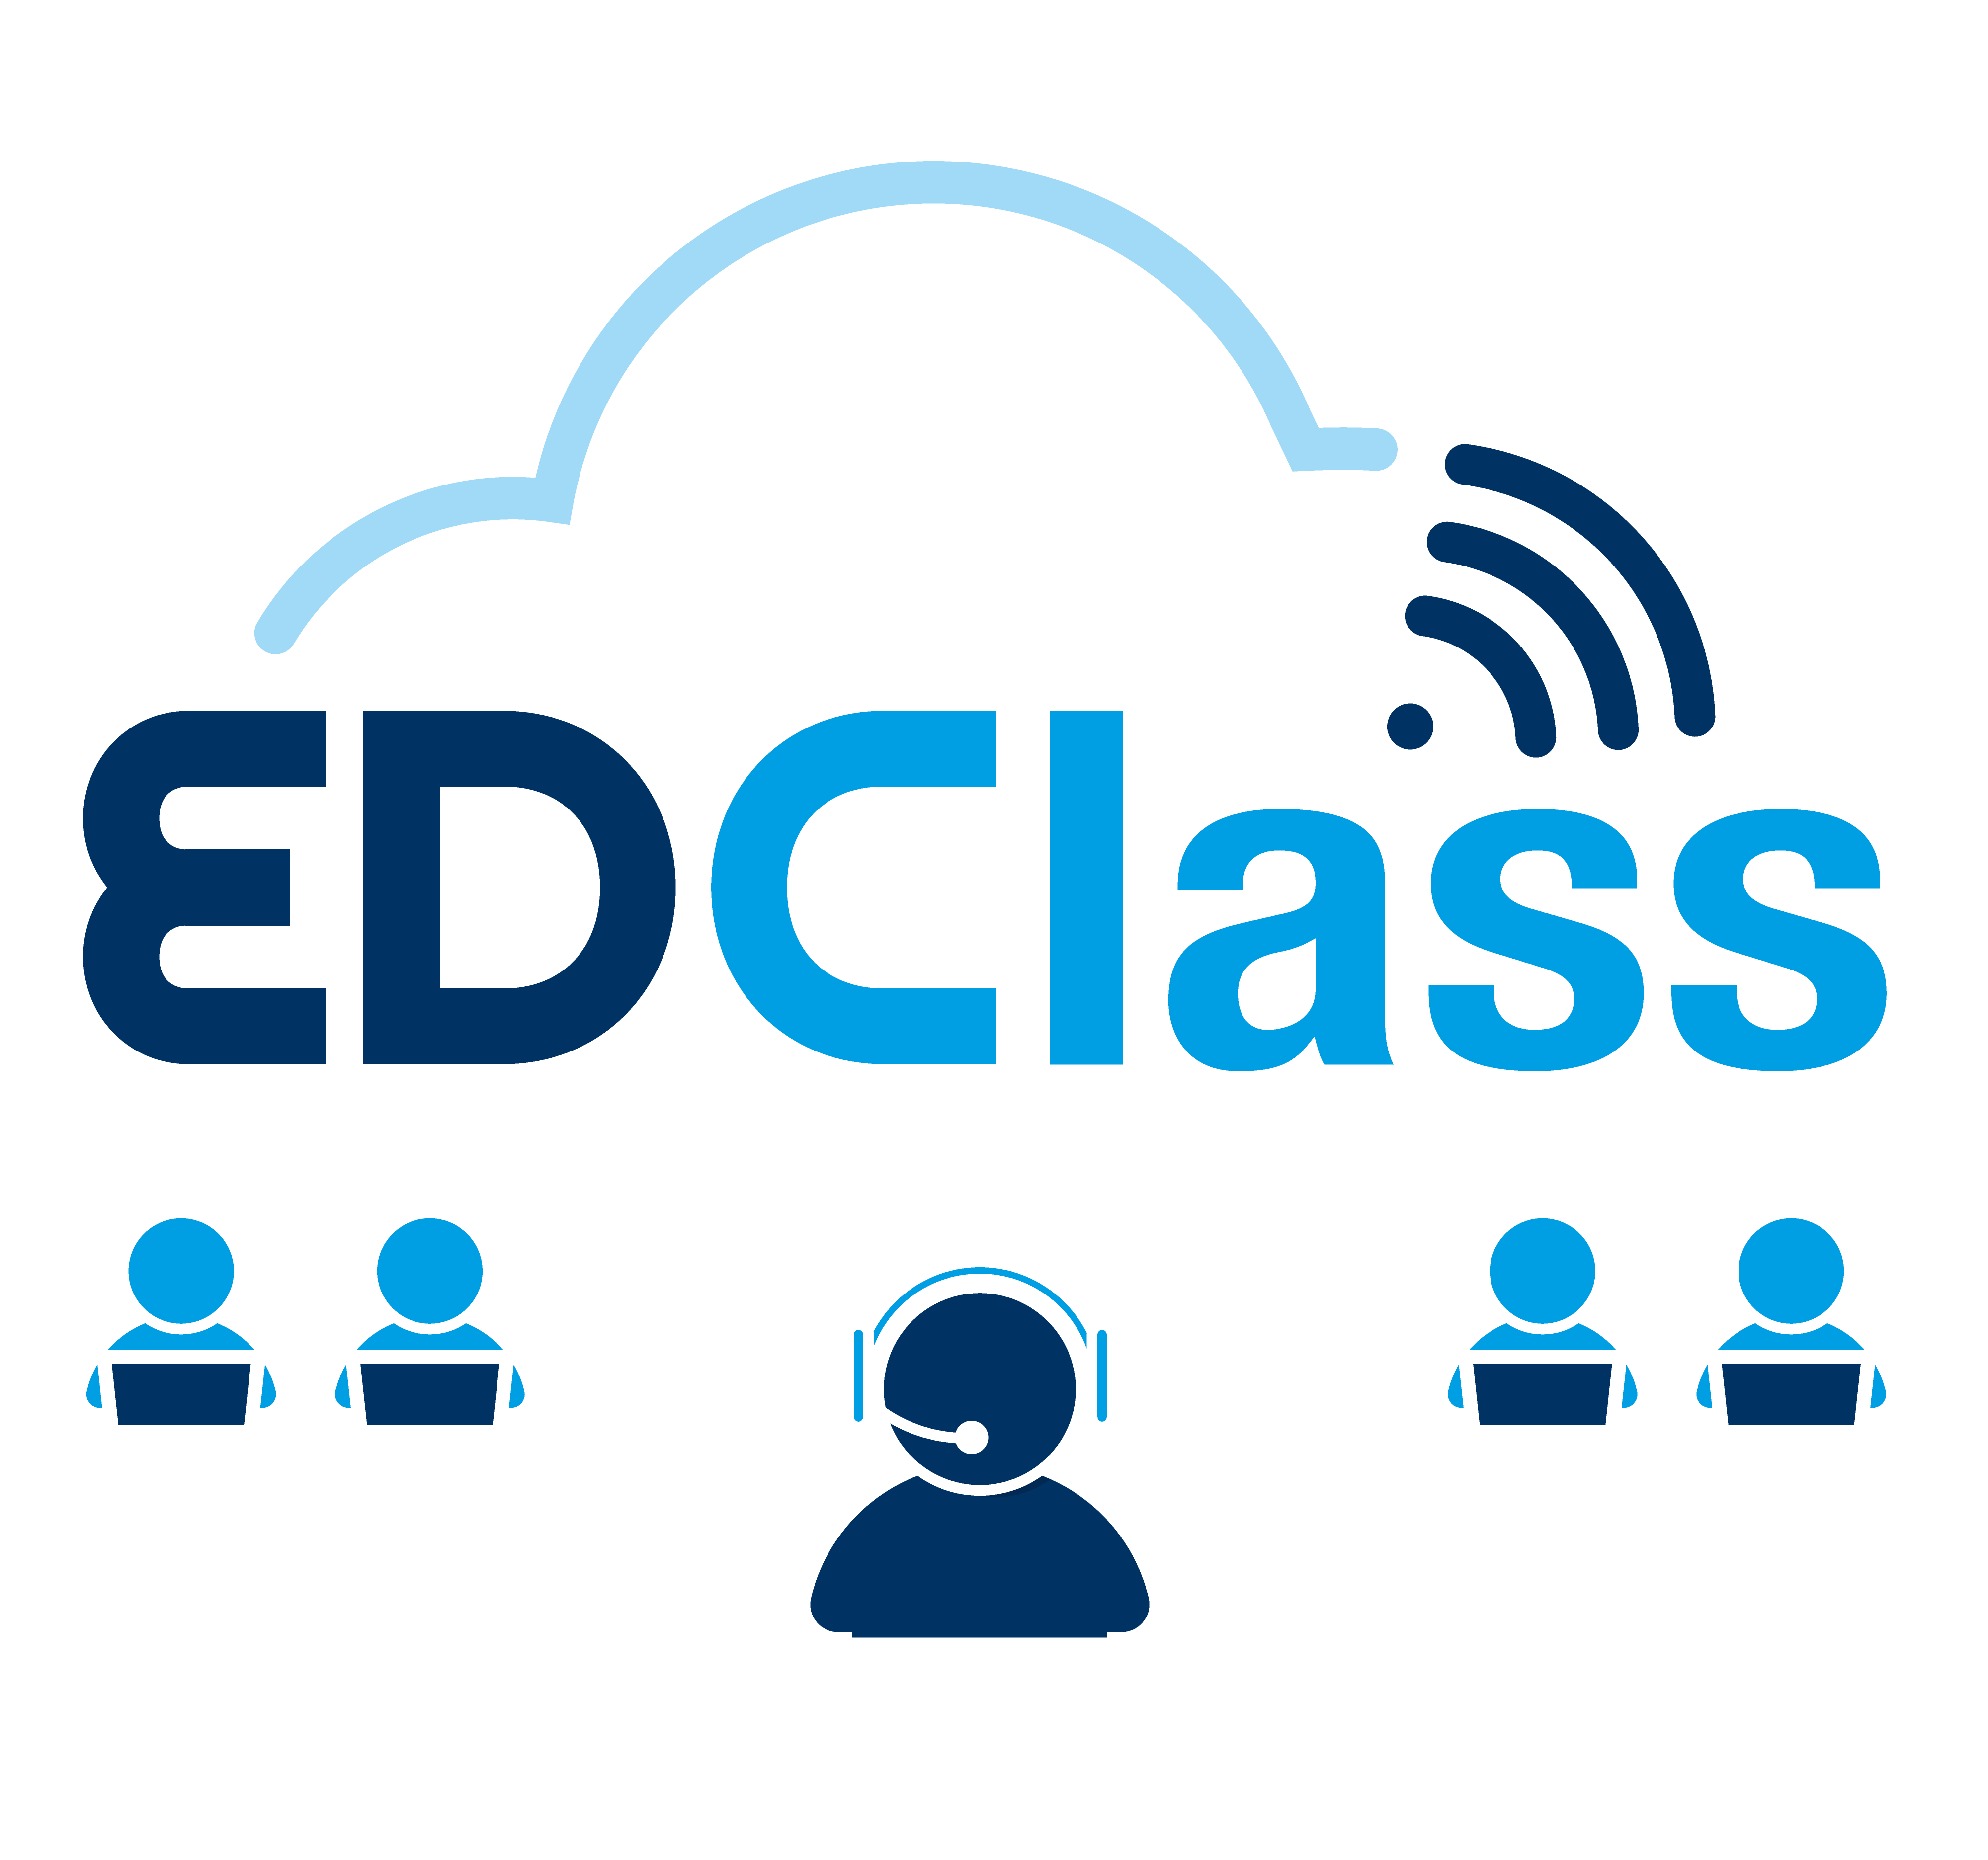 EDClass Logo